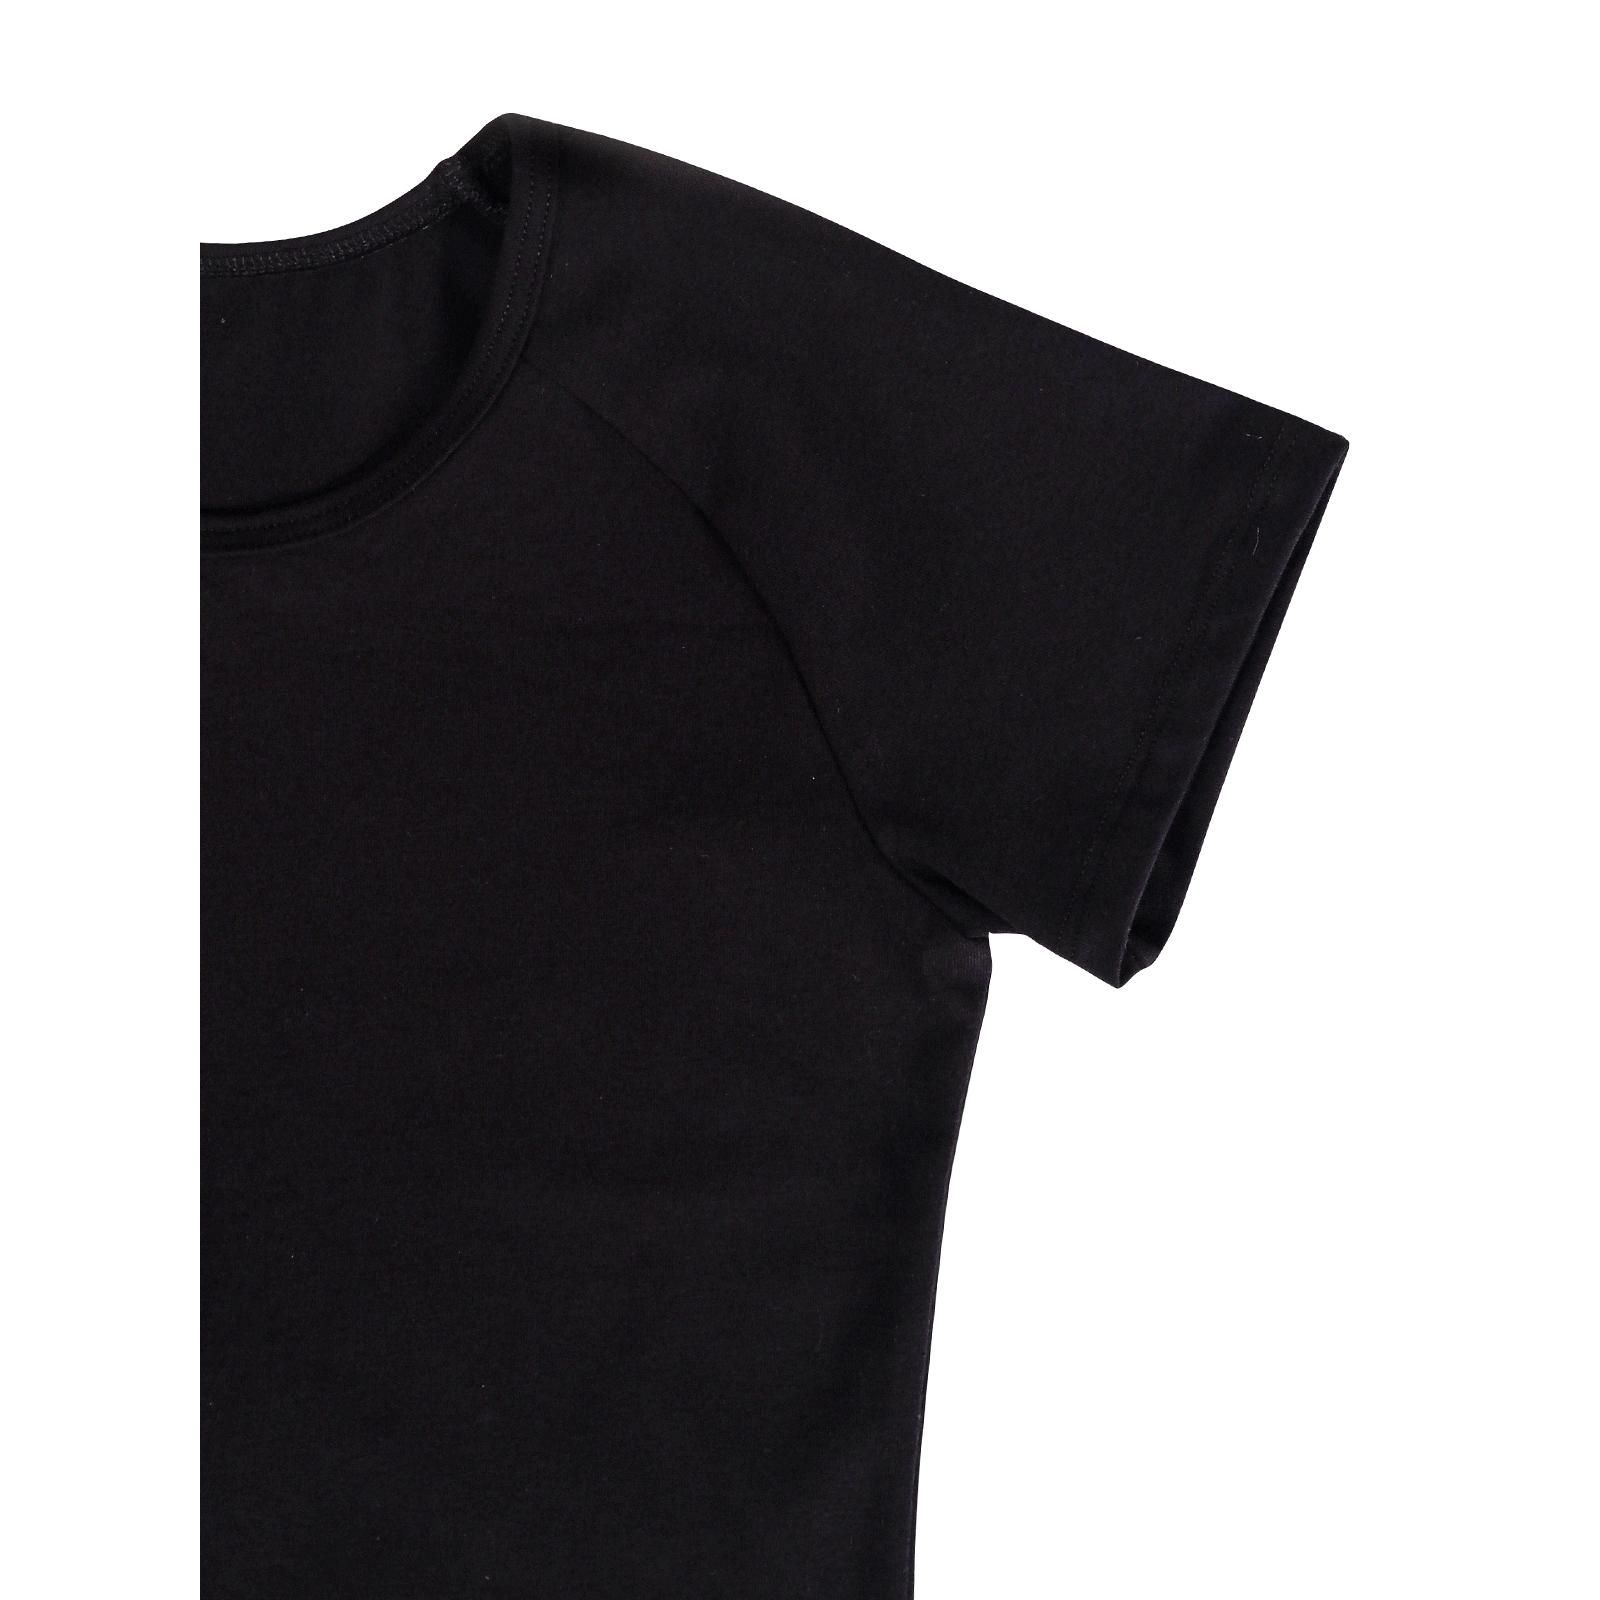 Camiseta Mangas Raglán de Algodón SOLO Negro Talla 34